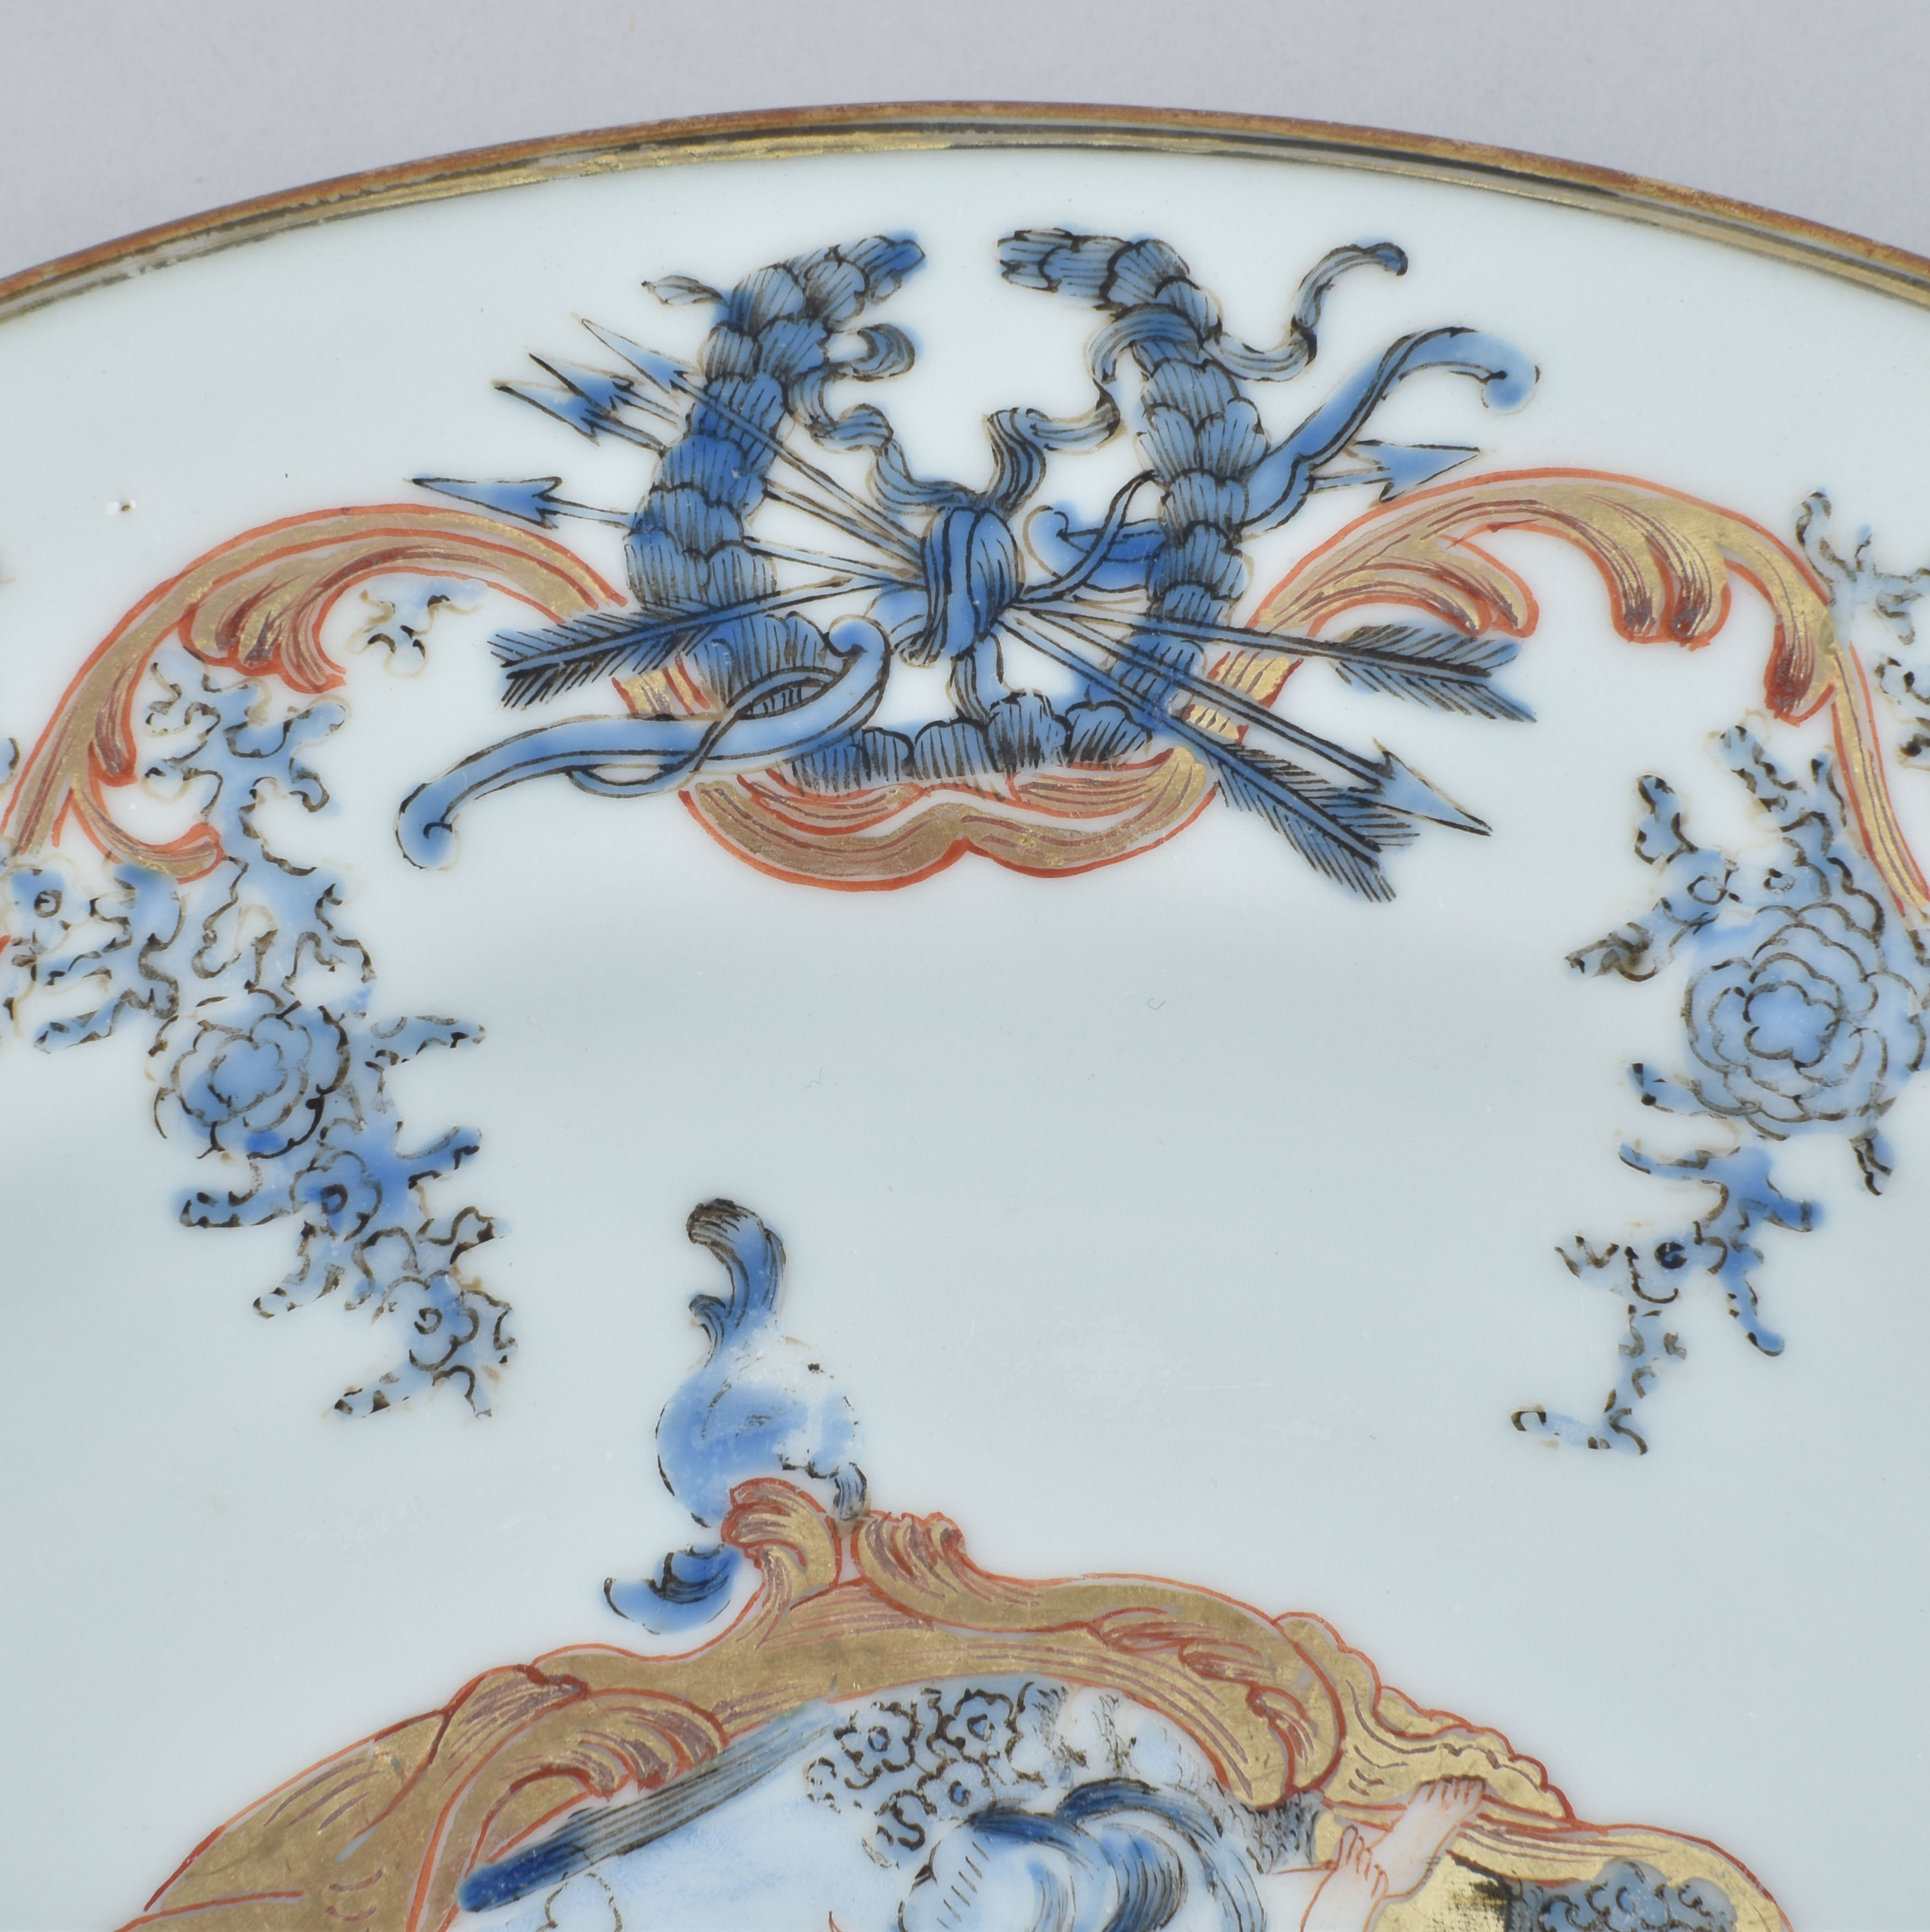 Porcelaine Qianlong (1735-1795), circa 1745/1750, Chine